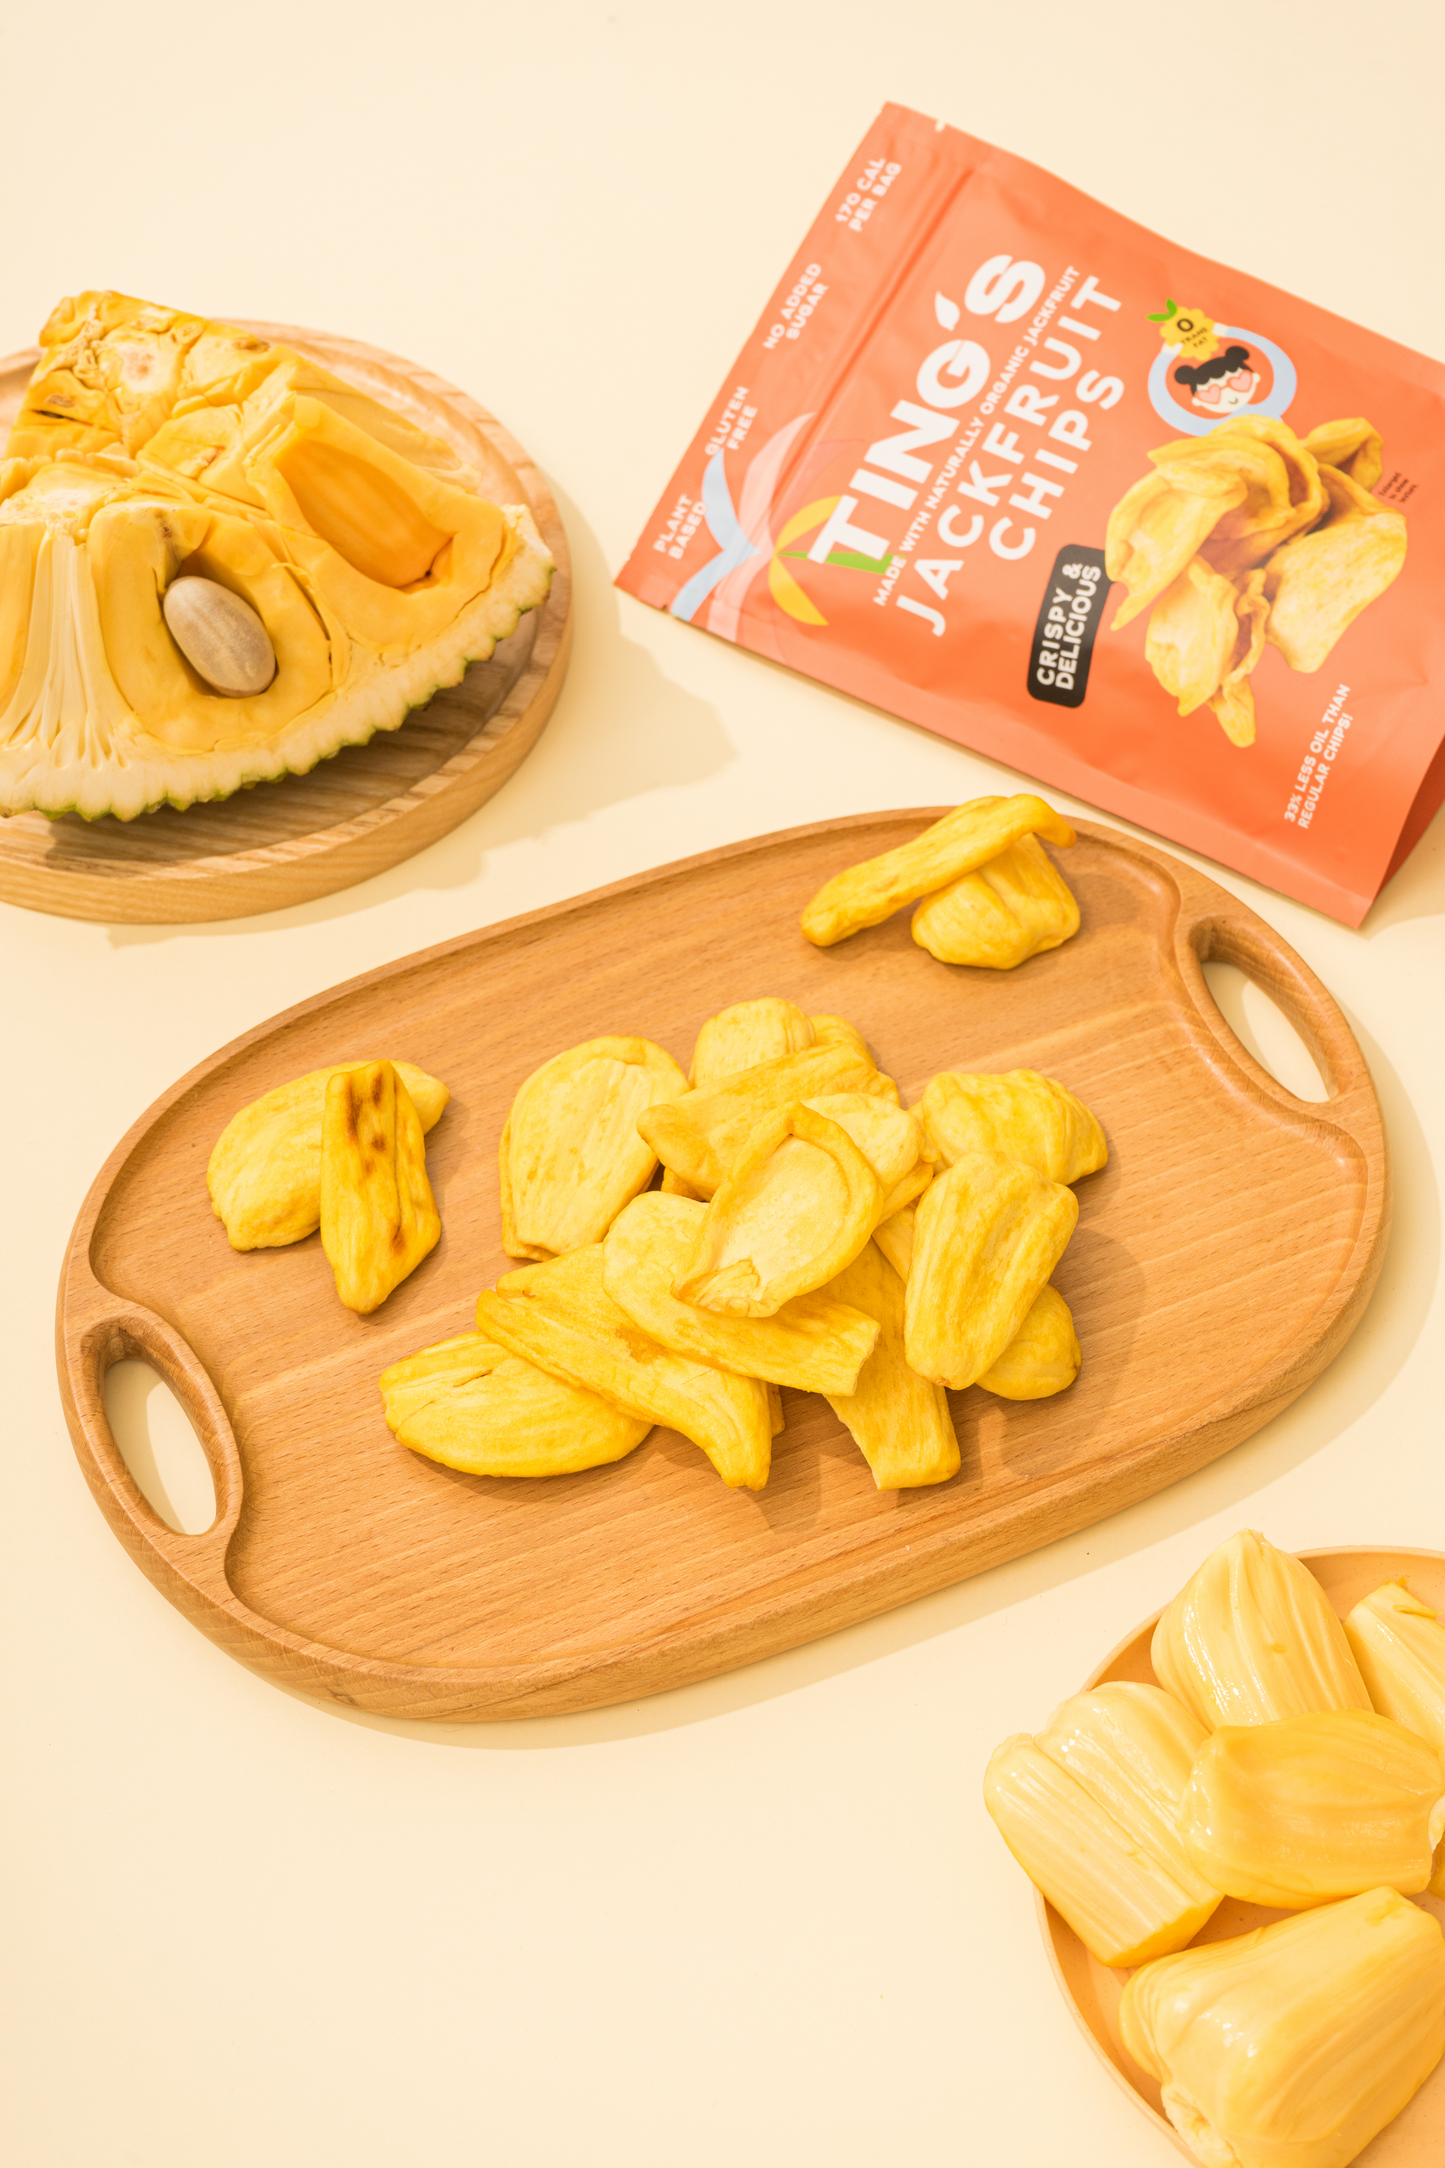 Ting's Jackfruit Chips | Original Flavor (24-Pack)